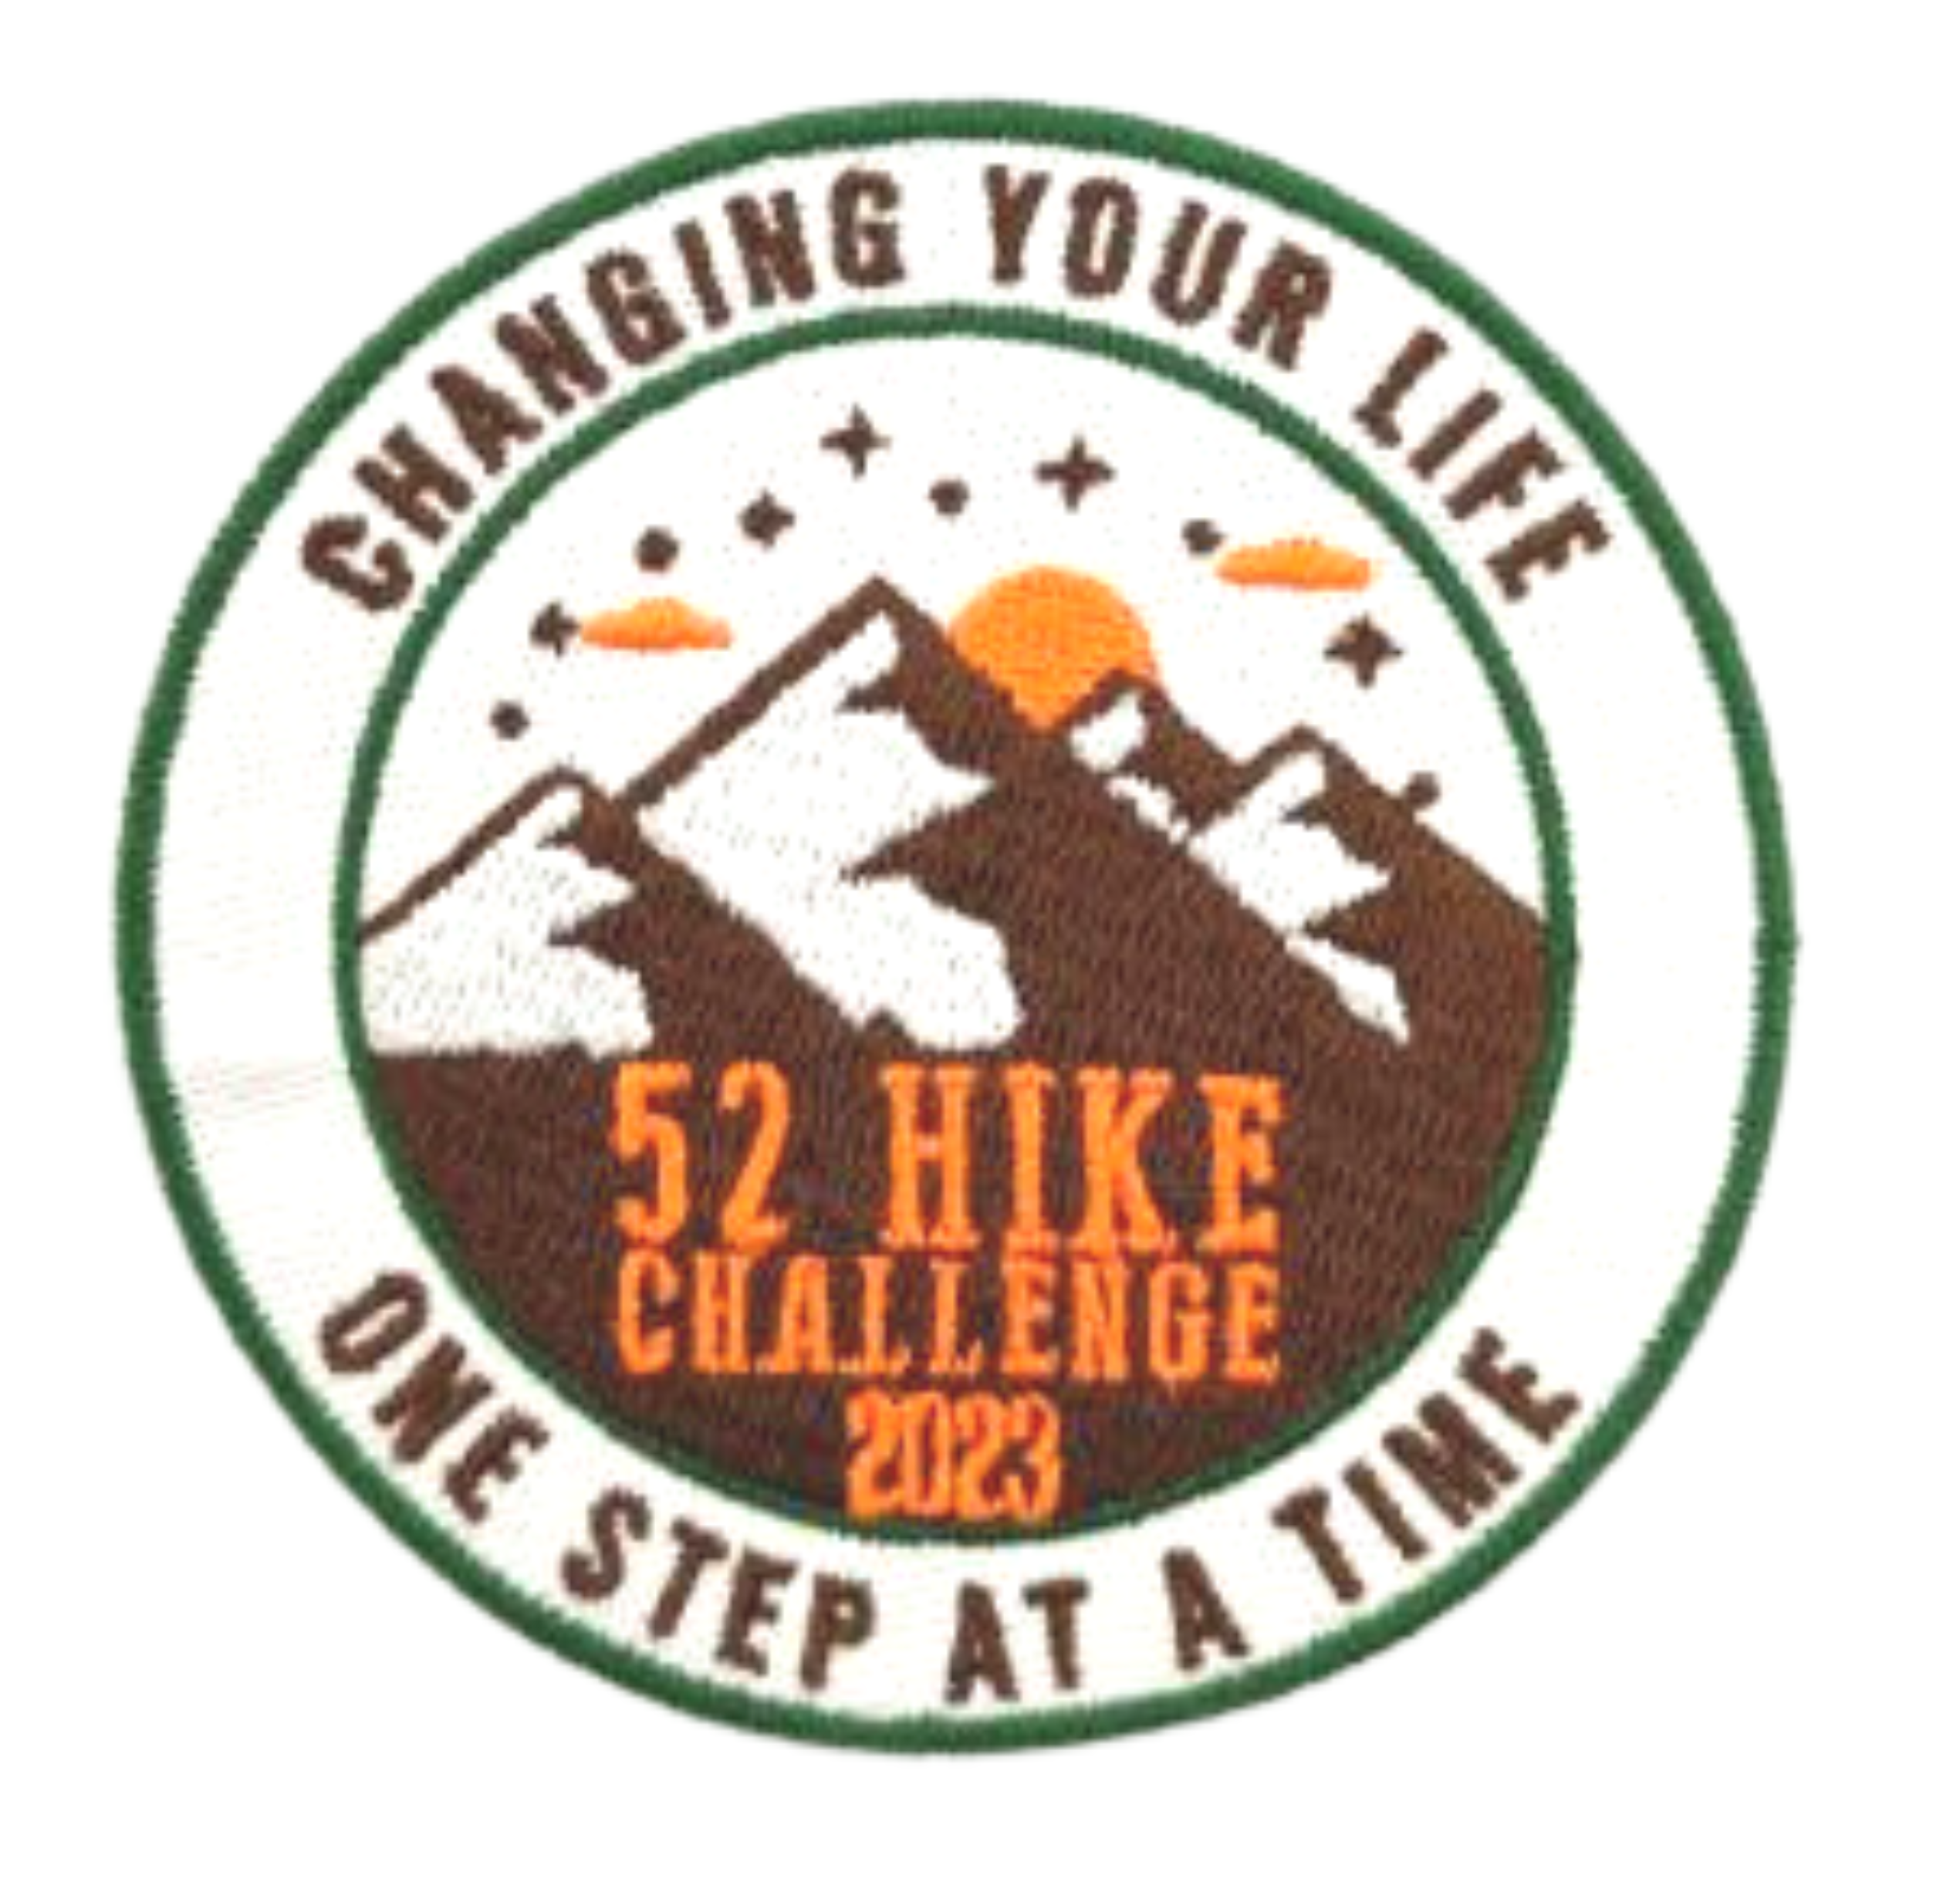 2023 52 Hike Challenge Sign Up + Standard Package